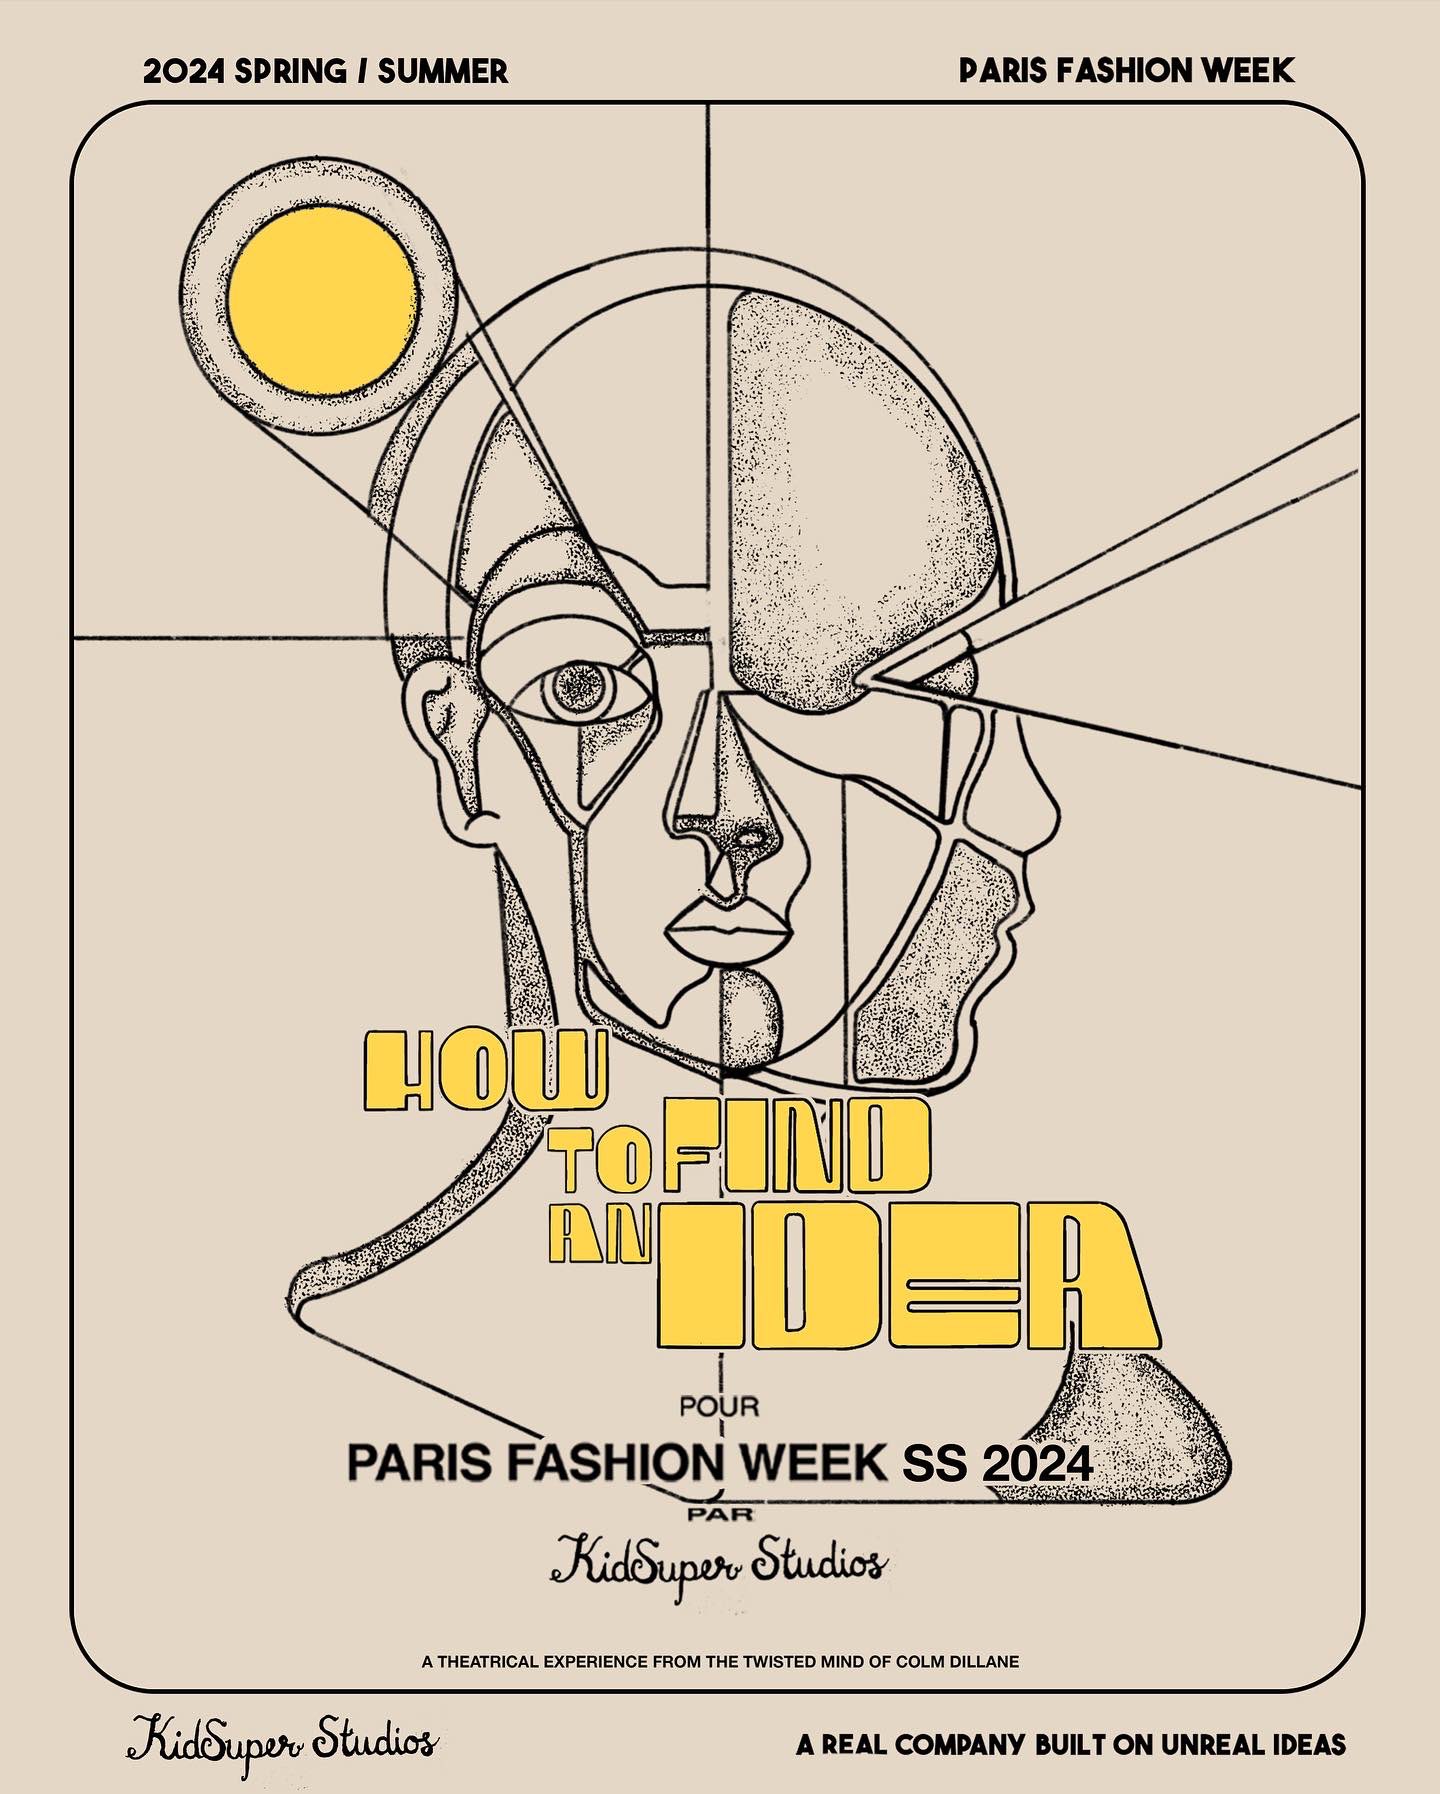 KidSuper AW22 “The MisAdventures of KidSuper” Paris Fashion Week - Luxsure